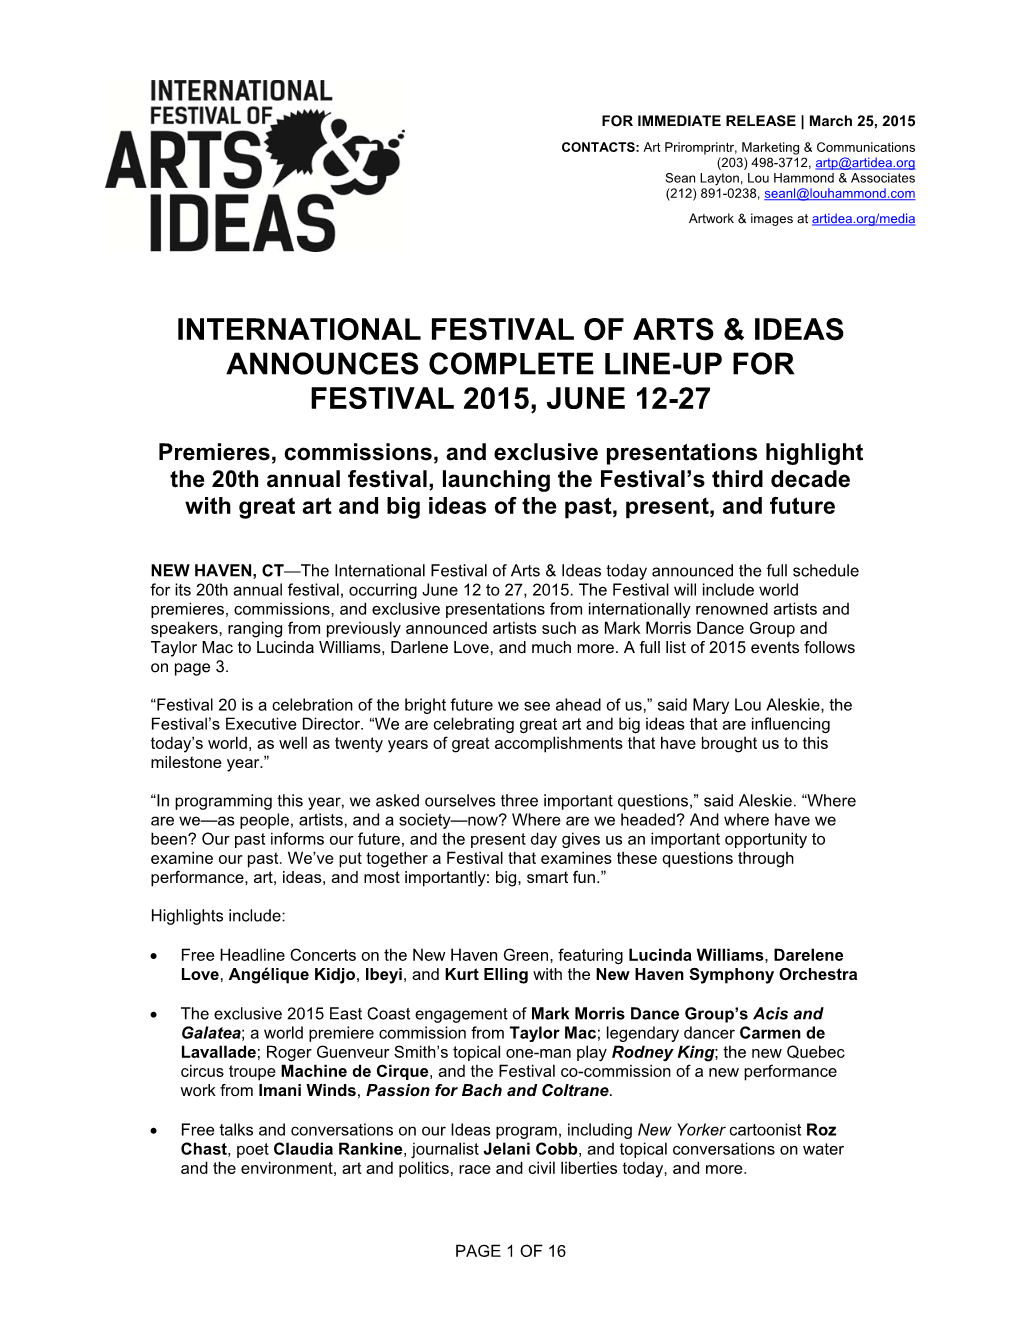 International Festival of Arts & Ideas Announces